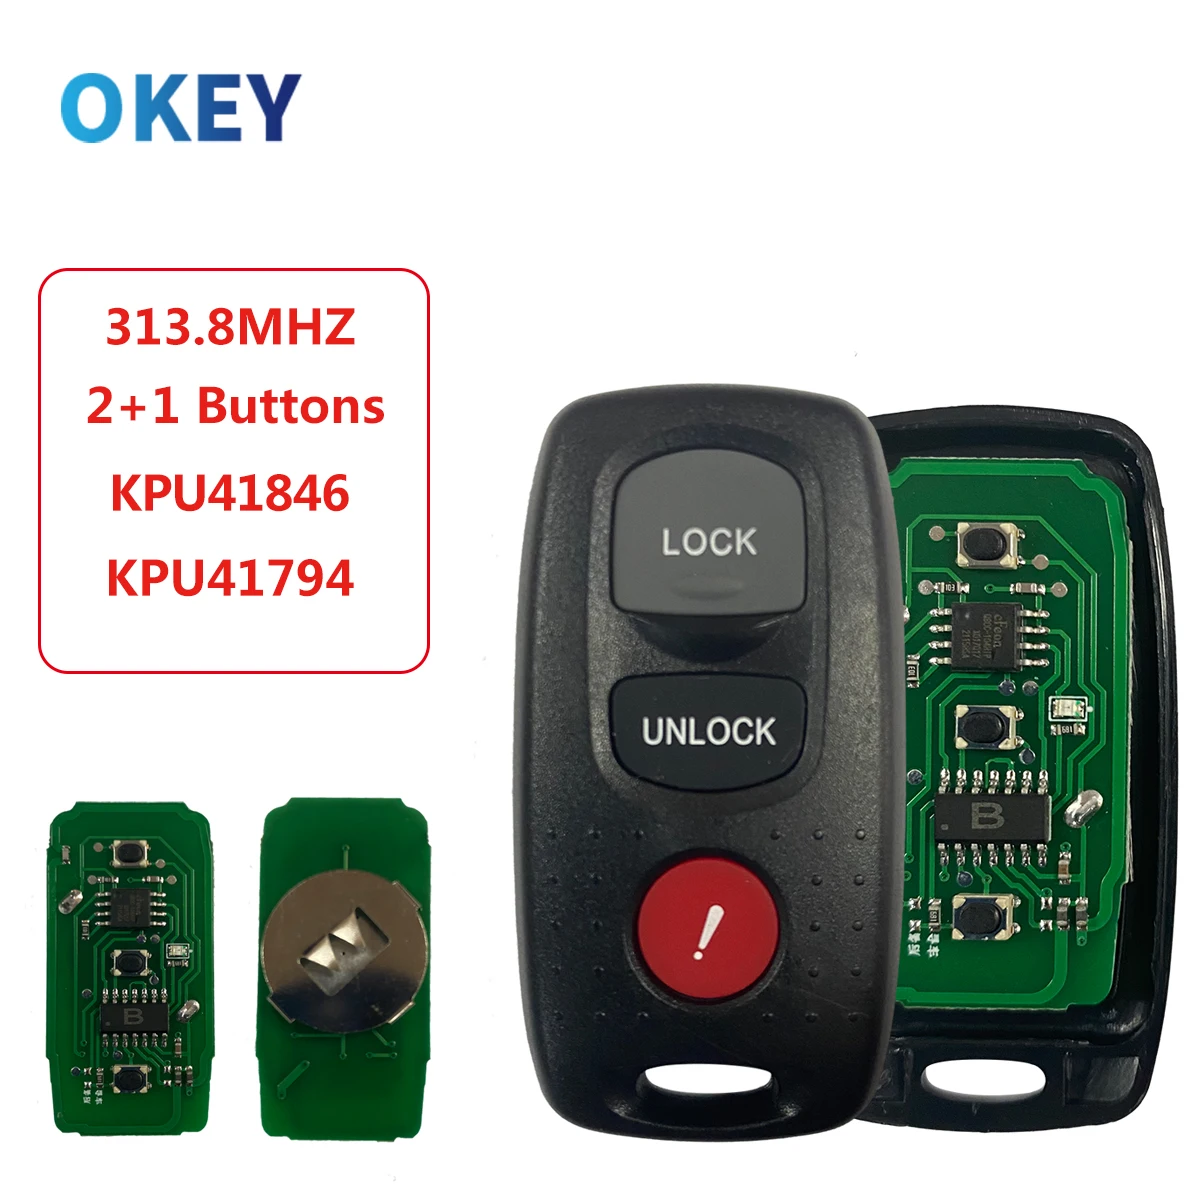 Okey Remote Car Key For Mazda 3 6 MPV Protege 5 2+1 Buttons KPU41846 KPU41794 313.8MHZ